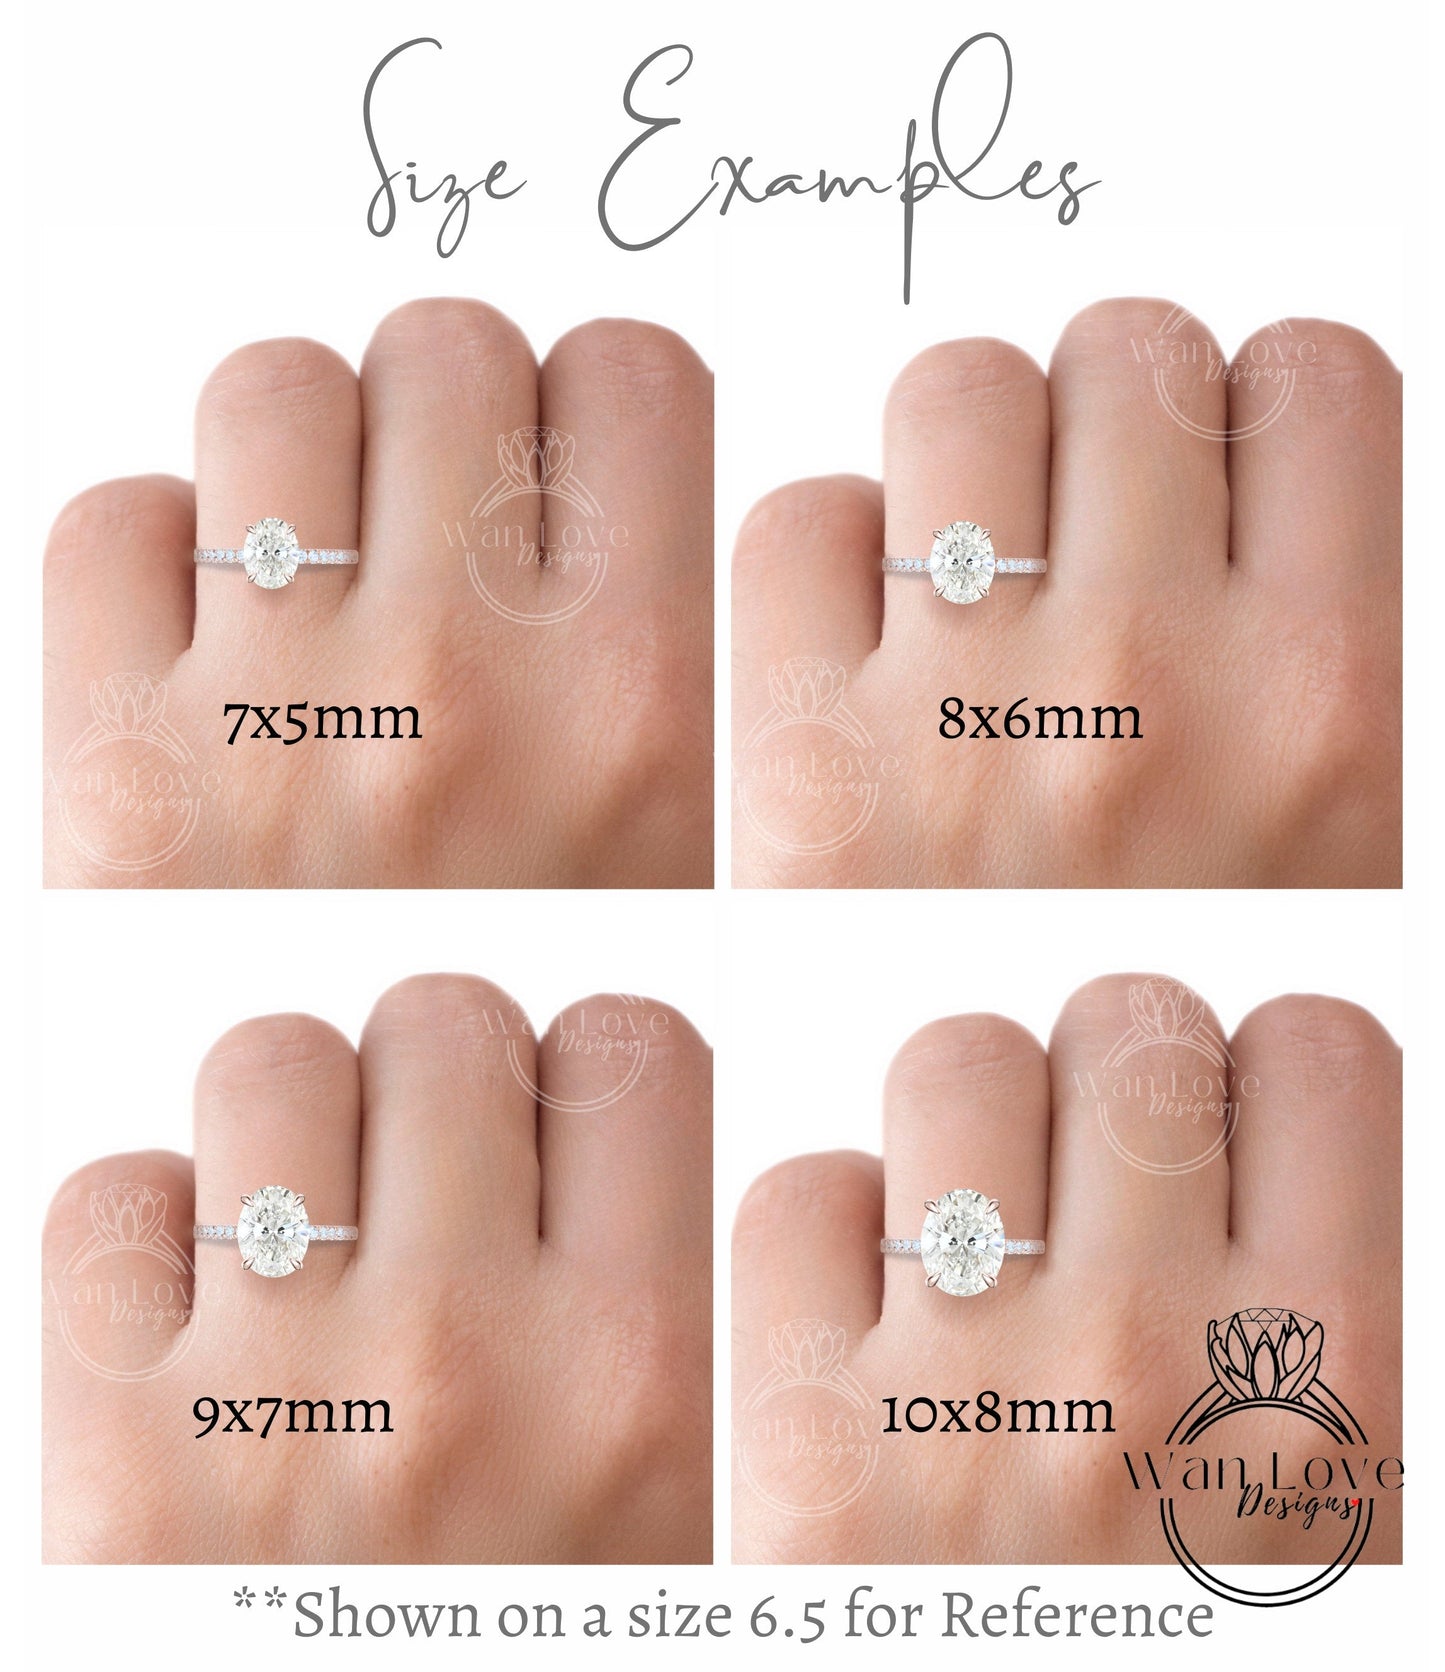 Salt & Pepper Diamond Oval cut dainty engagement ring vintage Unique Round diamond Cluster Moissanite gold engagement ring women Bridal gift Wan Love Designs